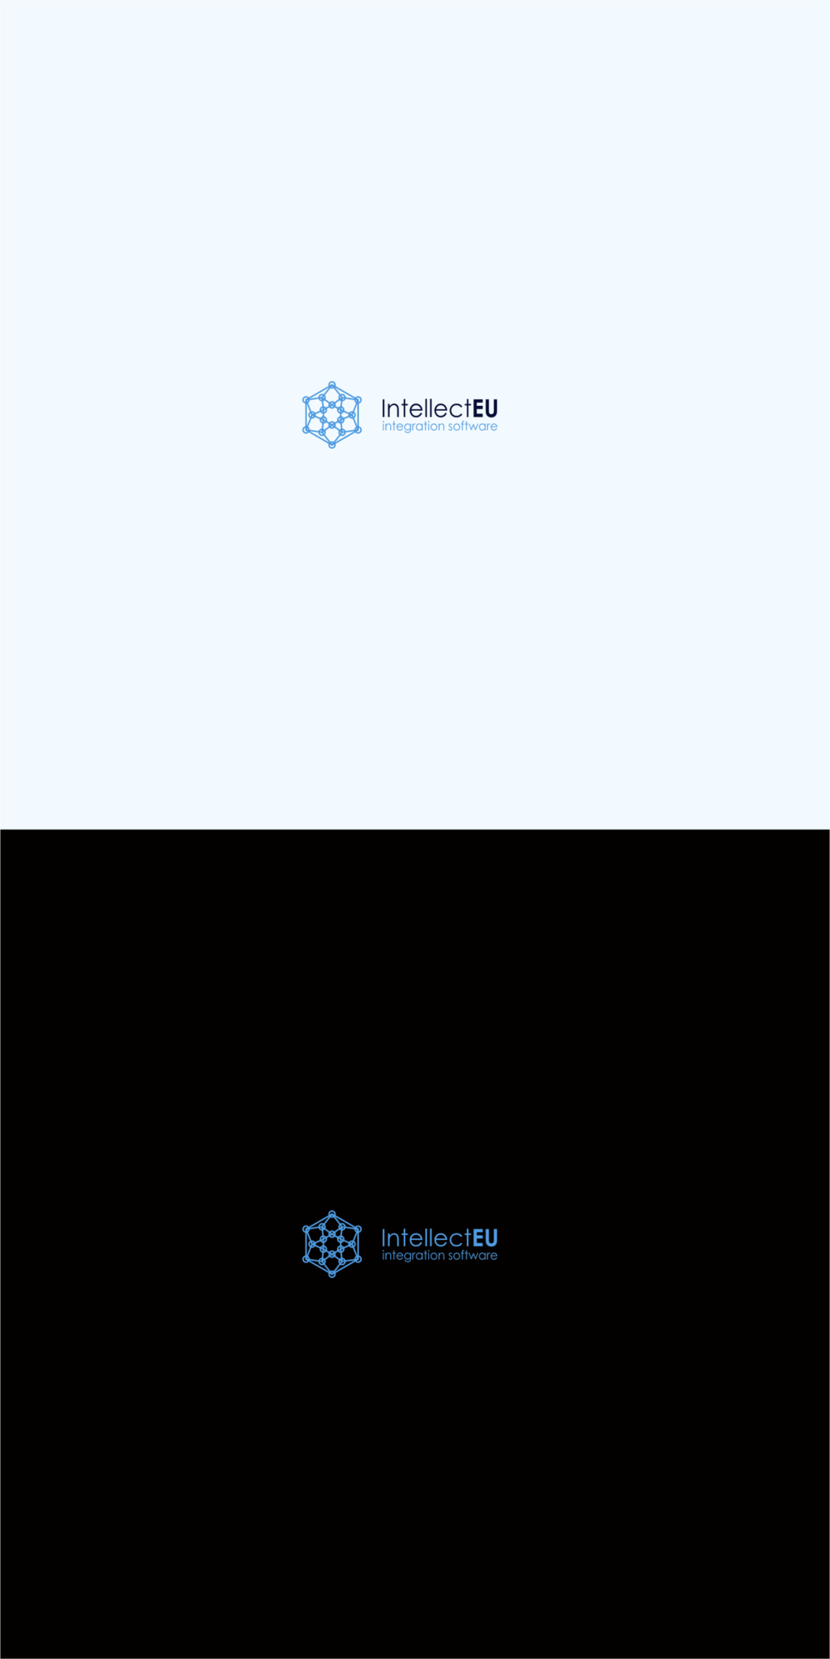 IntellectEU - Логотип для компании IntellectEU